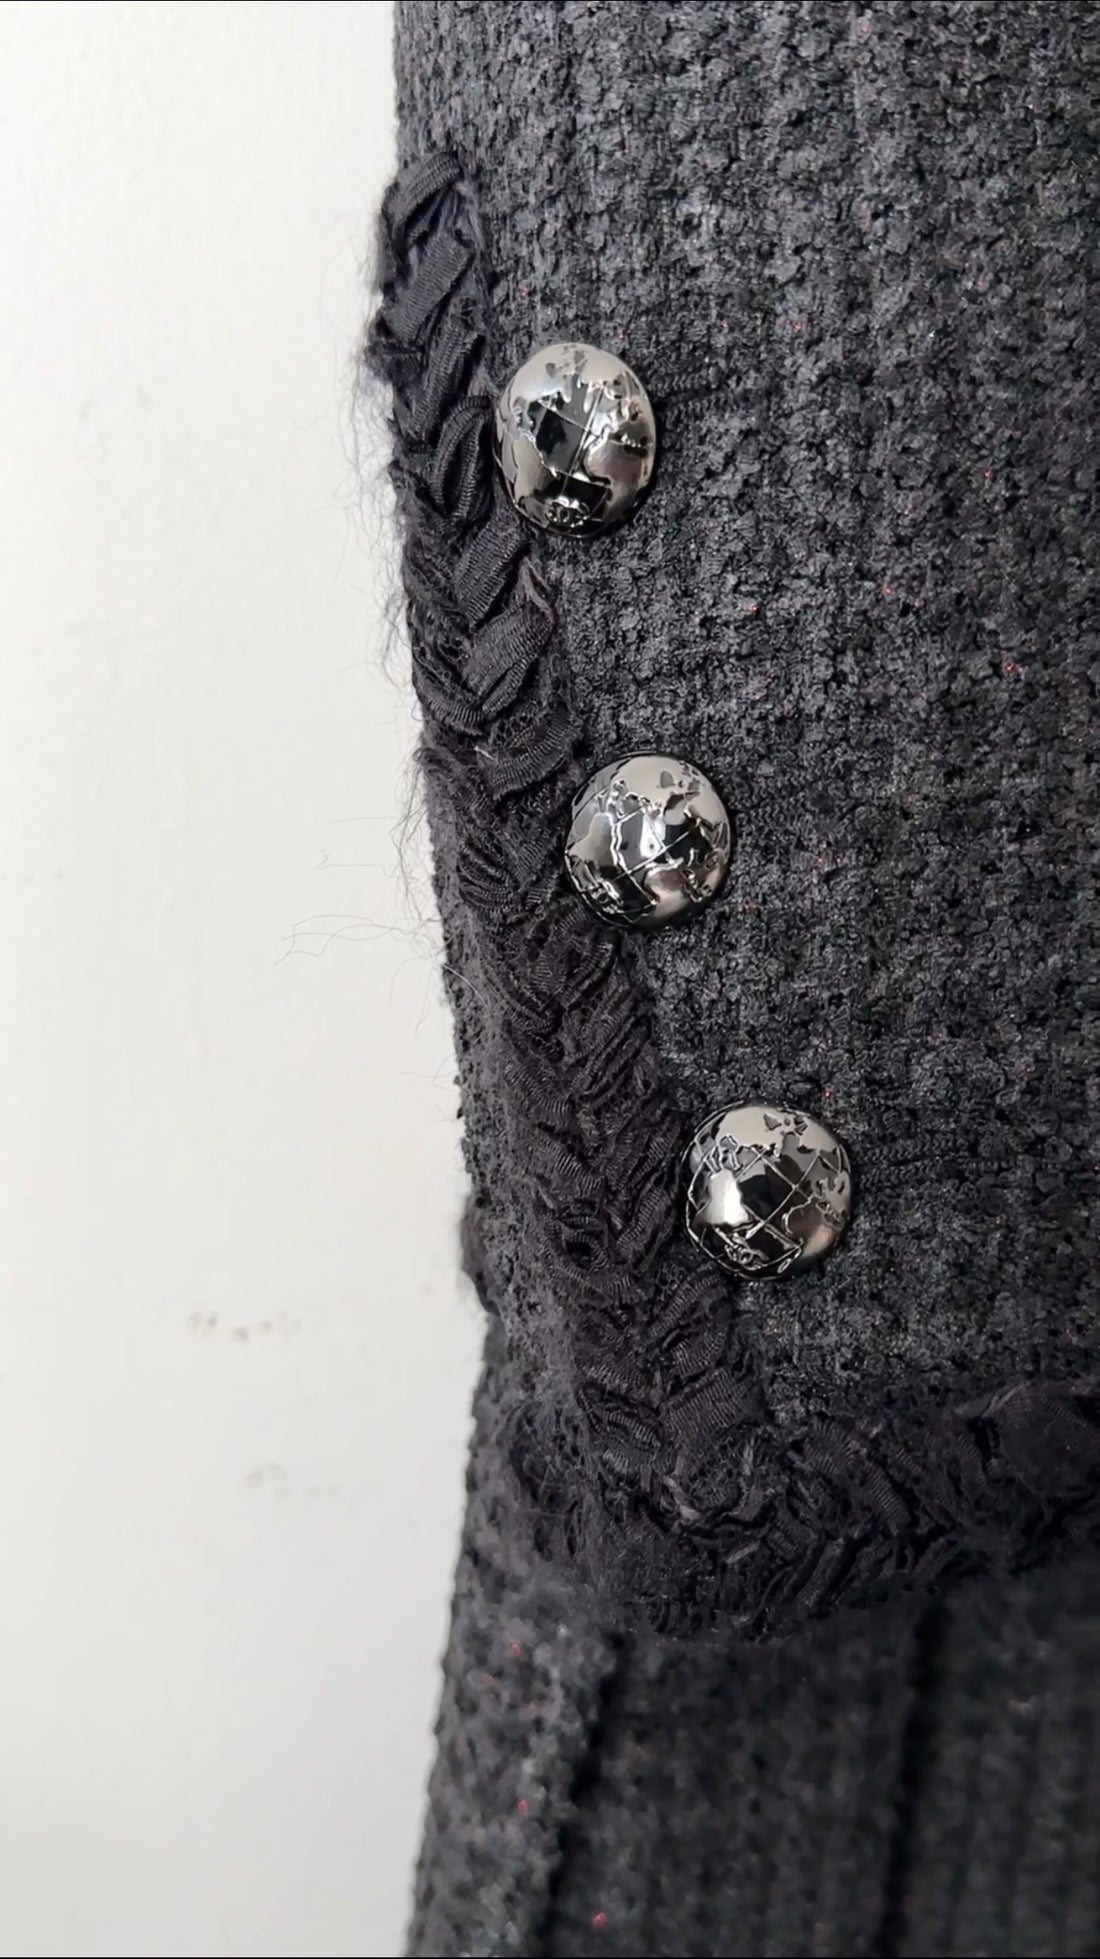 Chanel 2013 Fall Black Tweed Runway Coat Dress - L / XL